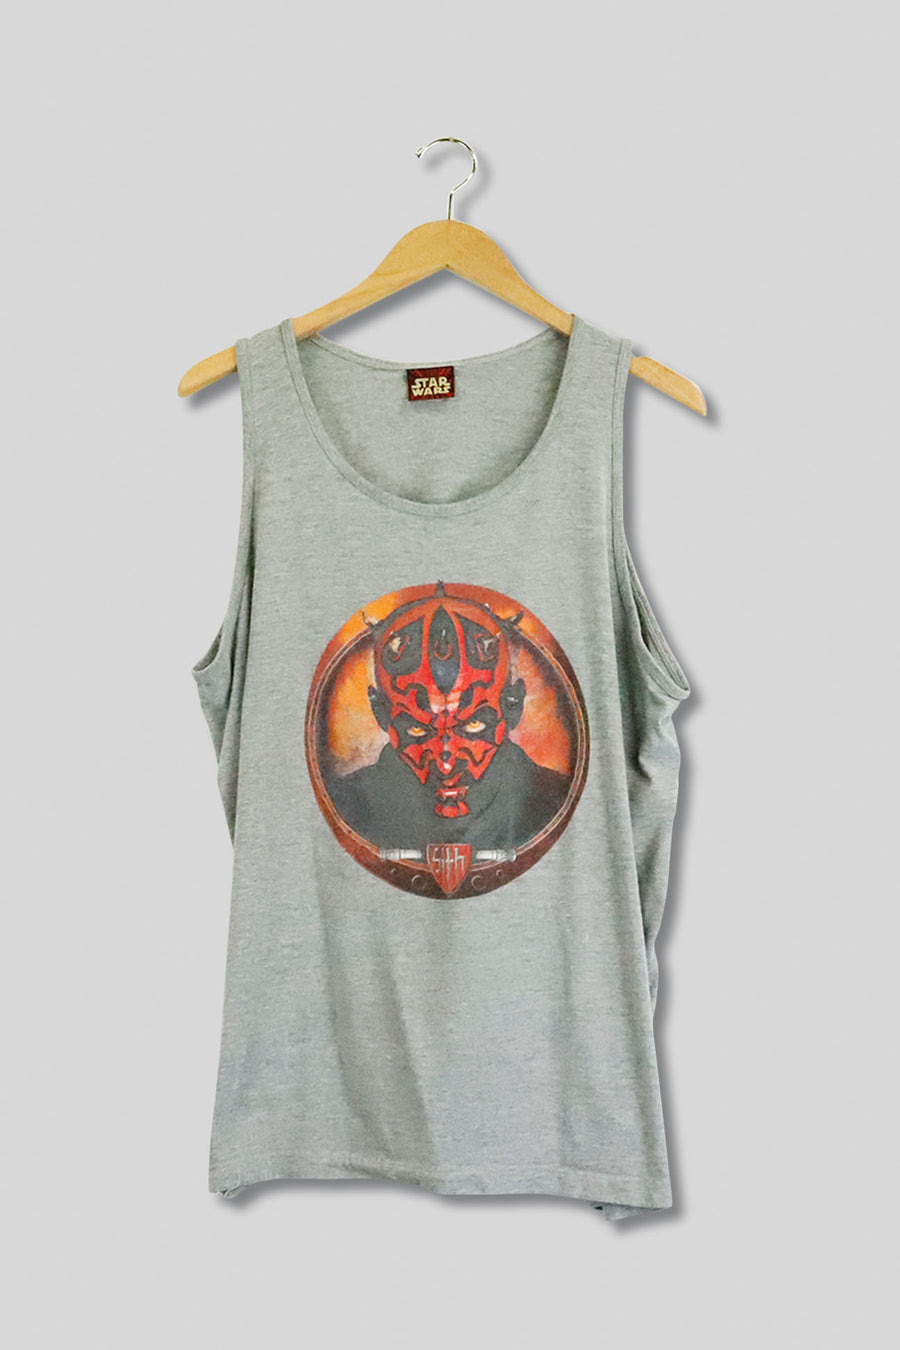 Vintage Star Wars Darth Maul T Shirt